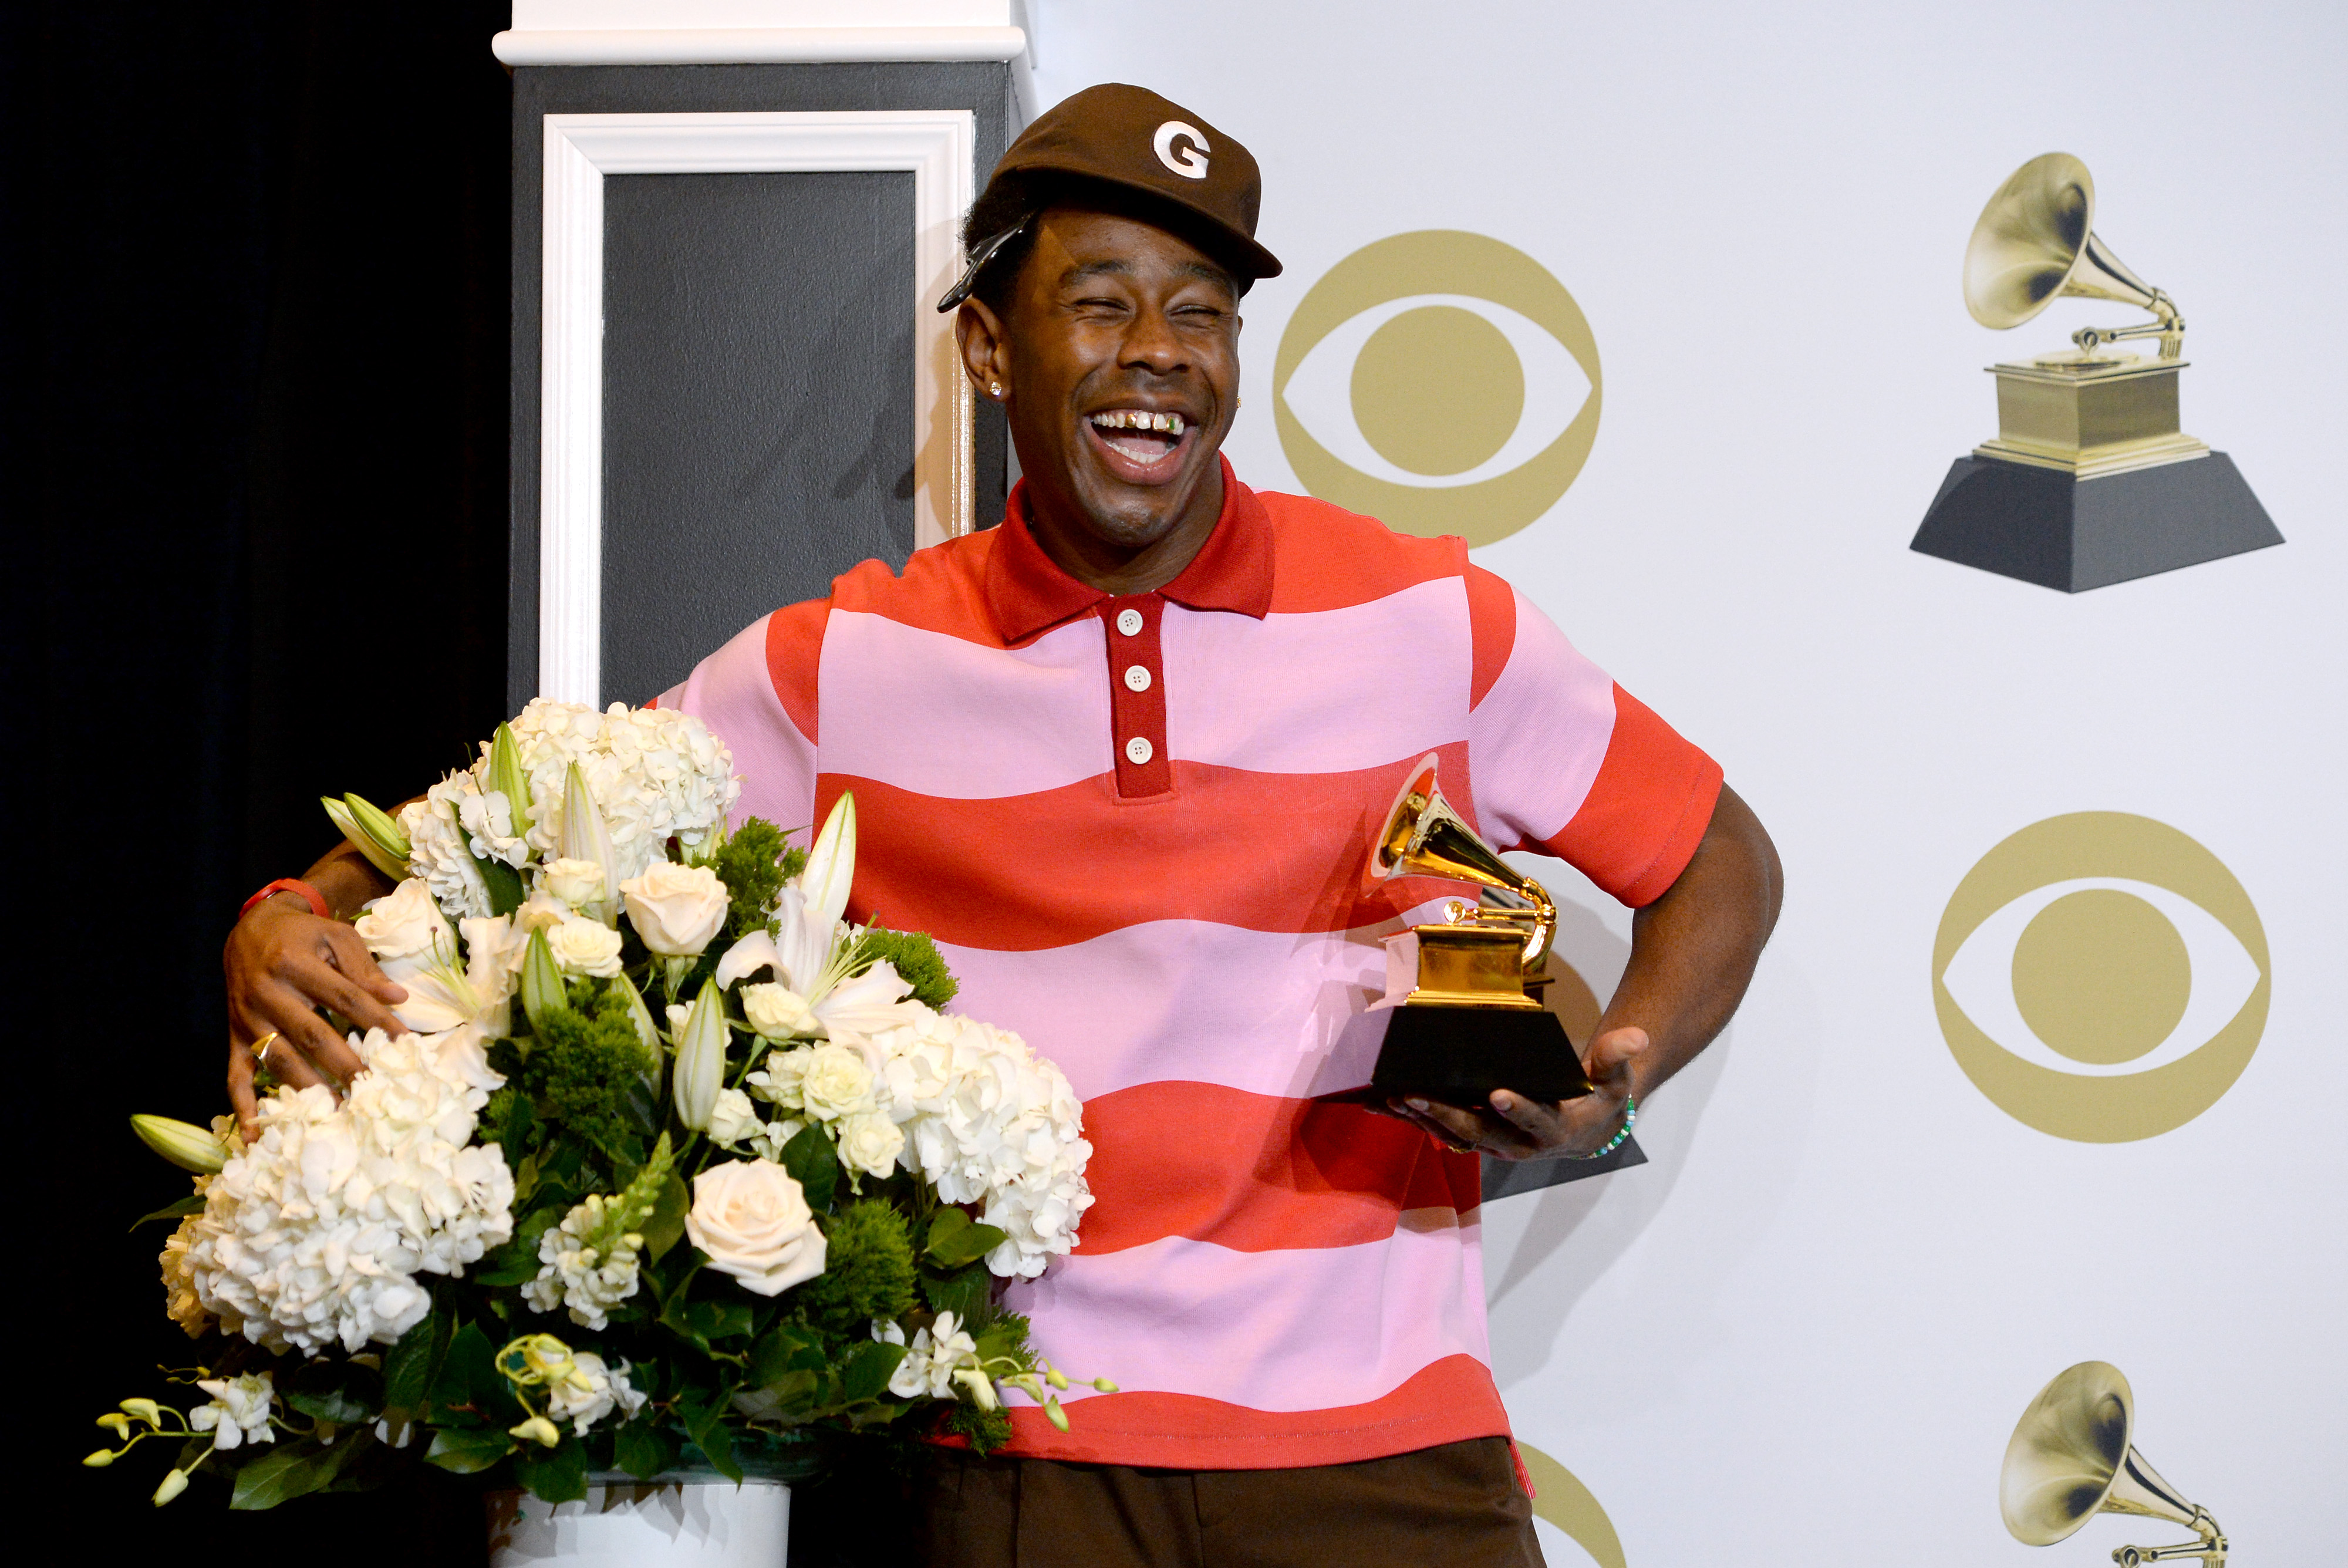 Tyler, the Creator Calls Out Grammy Categories After Best Rap Album Win